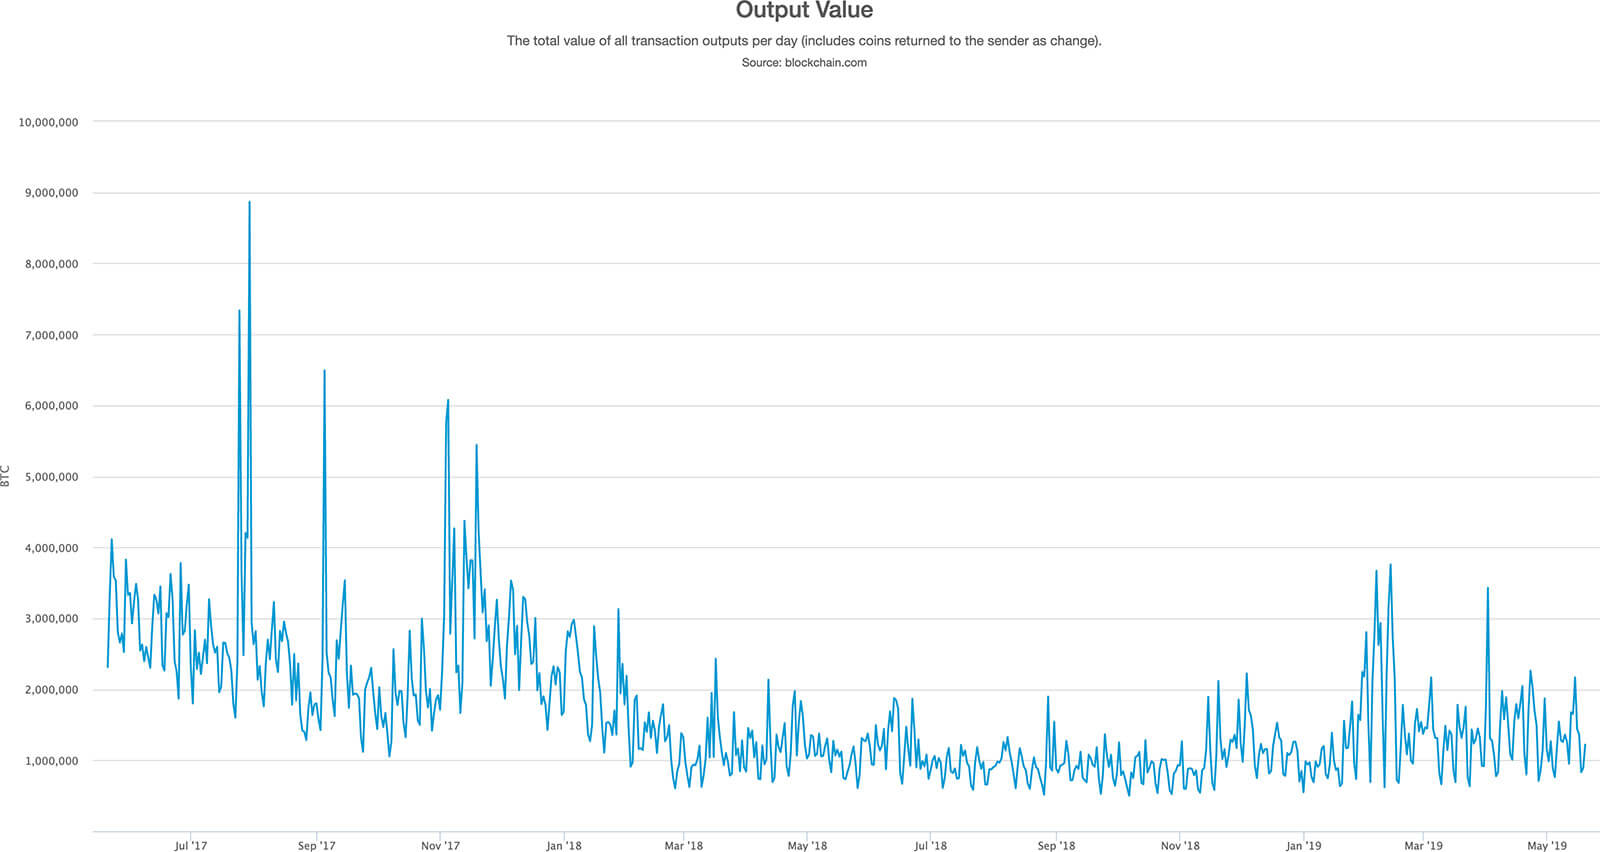 Bitcoin outputs per day